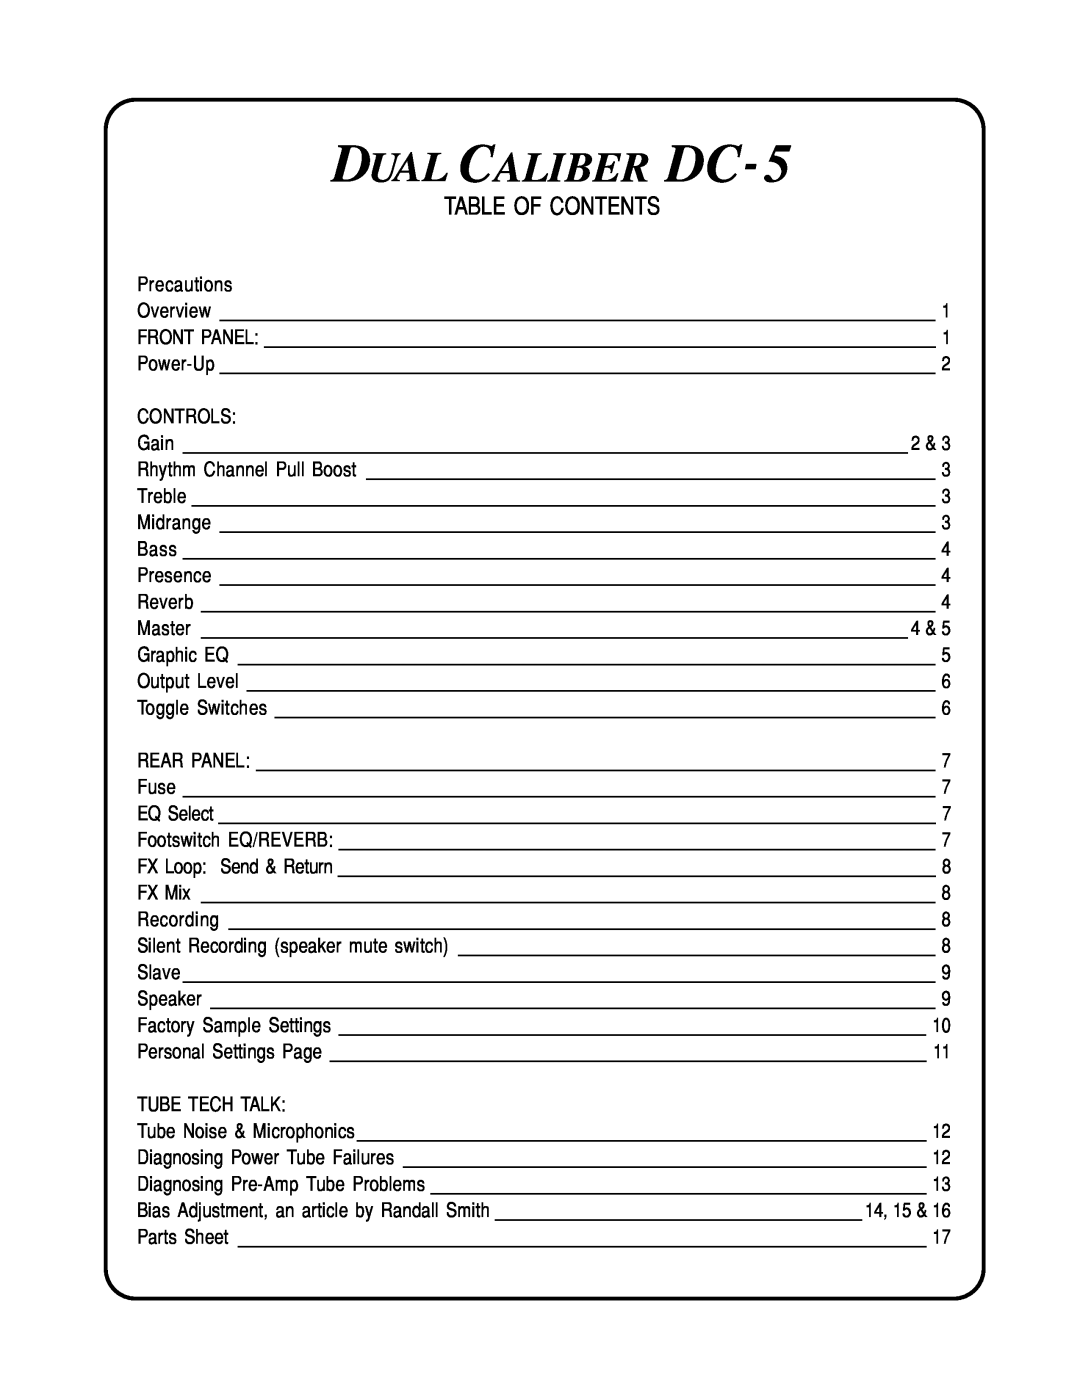 Mesa/Boogie DC5 manual Table Of Contents, Dual Caliber Dc 